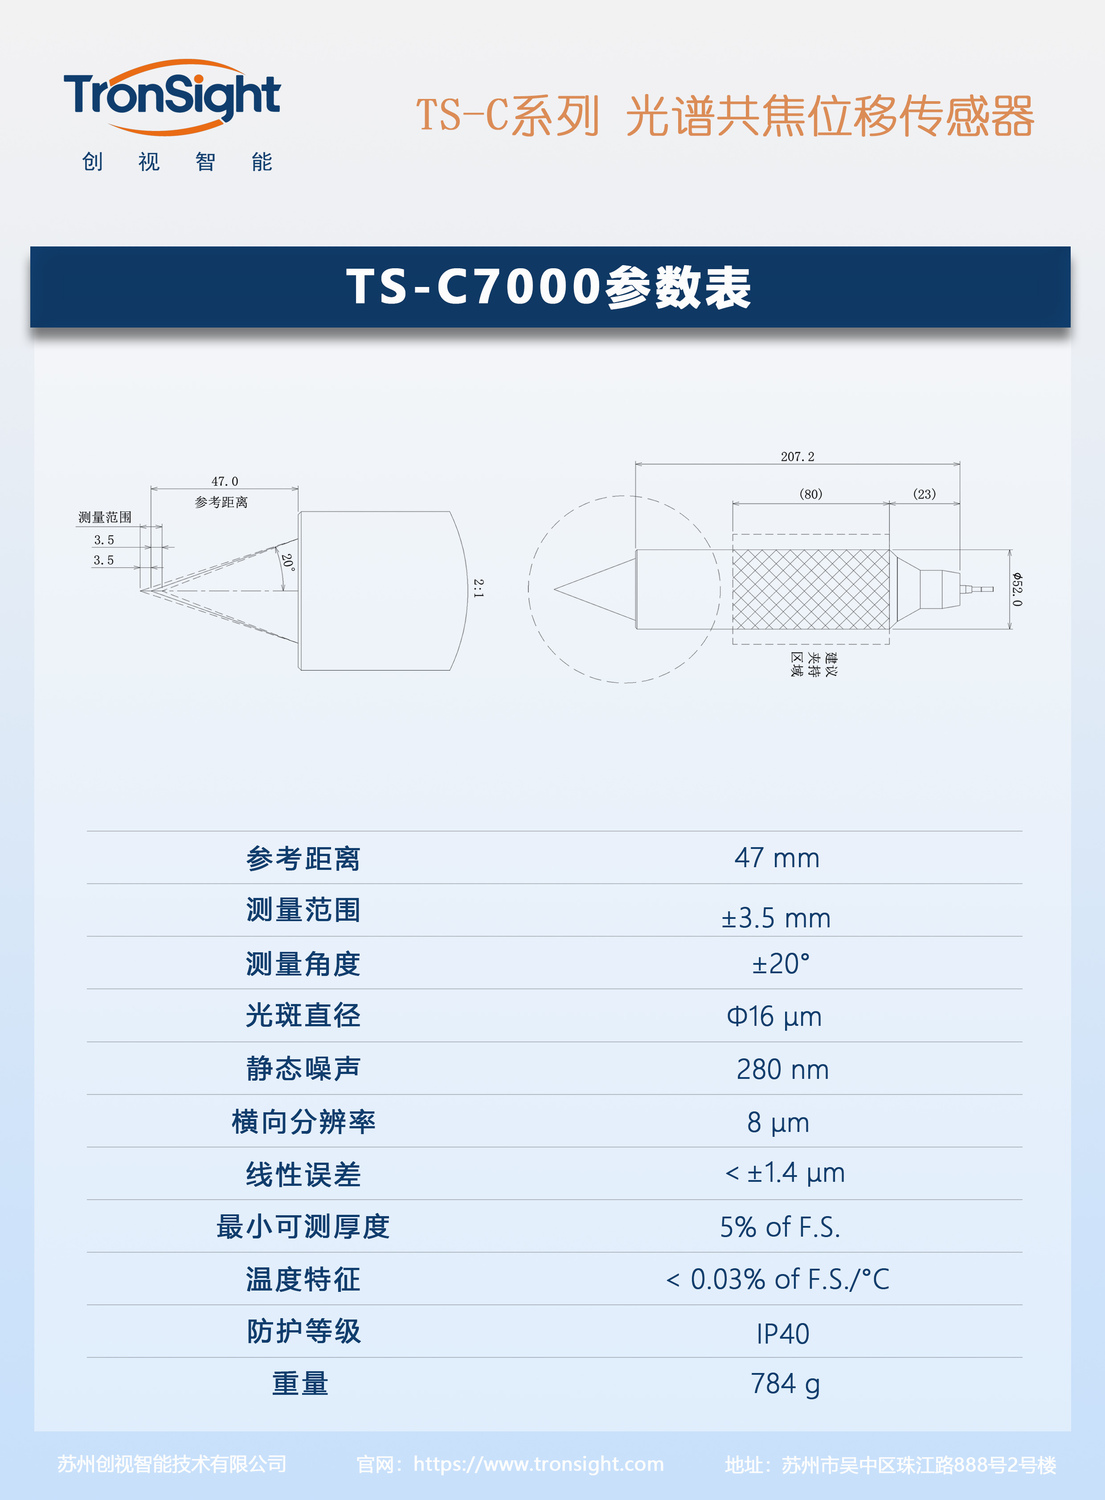 TS-C7000.jpg